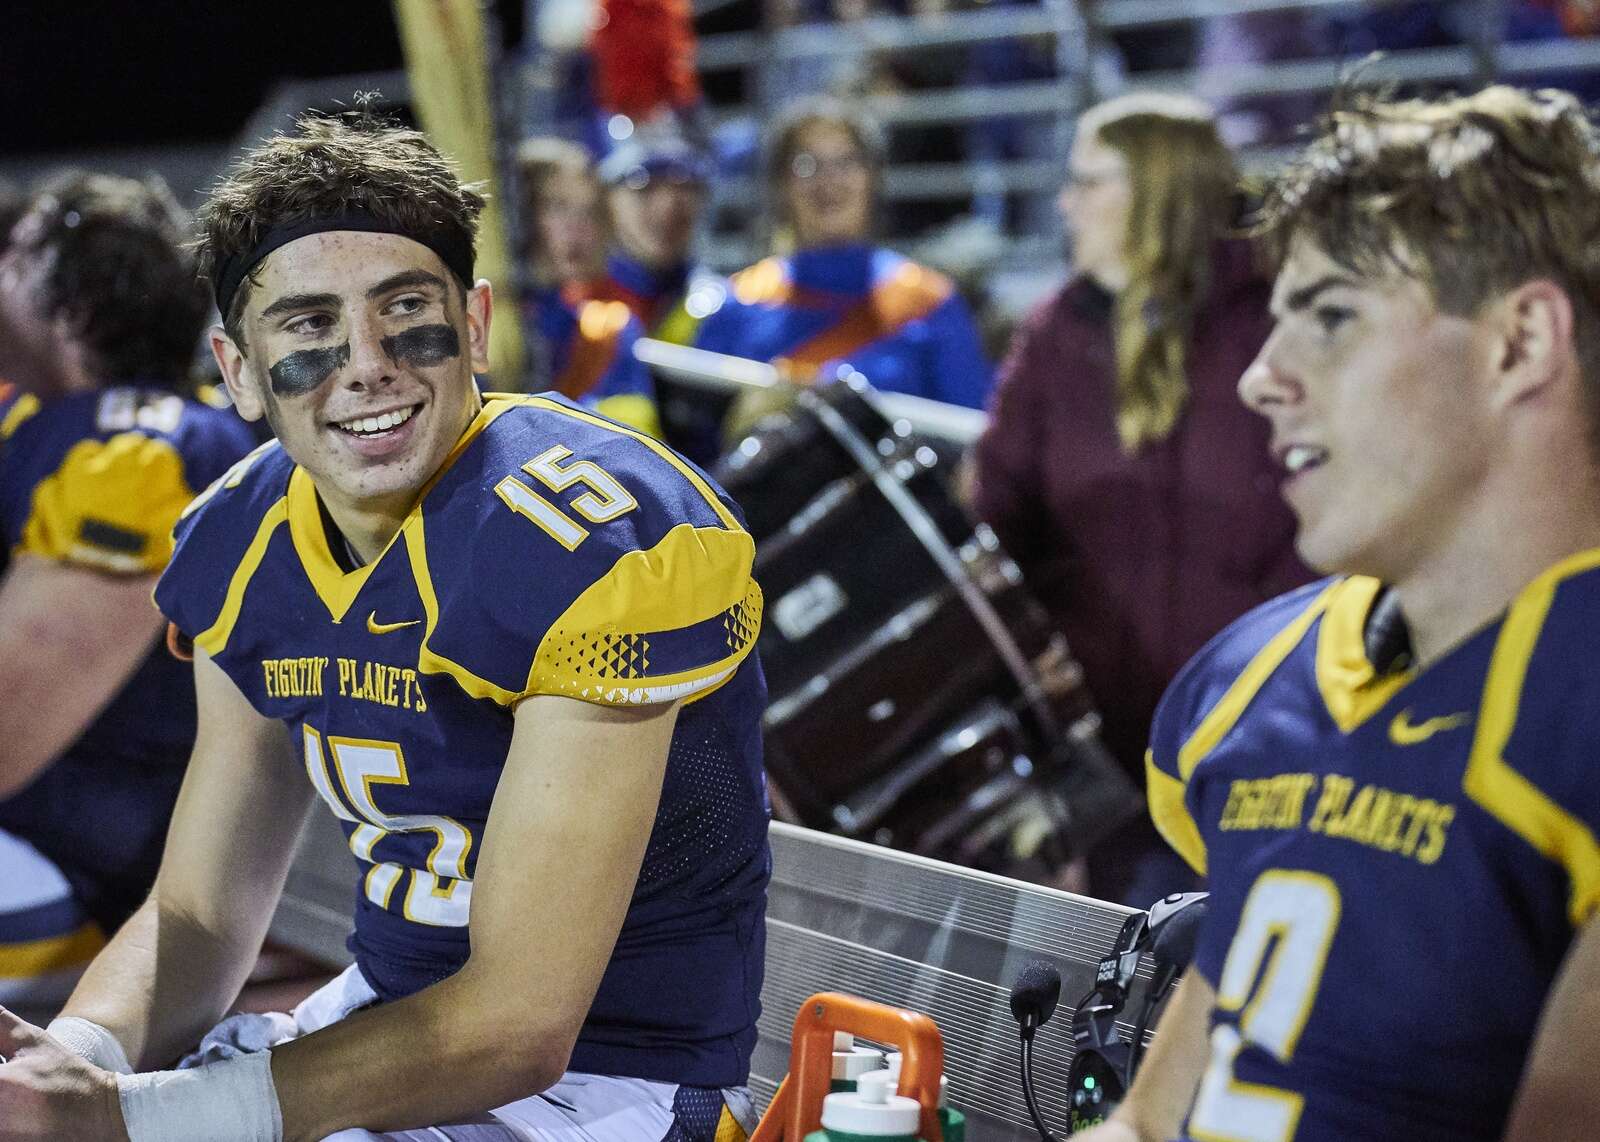 Mars junior quarterback Luke Goodworth talks with teammate Evan Wright